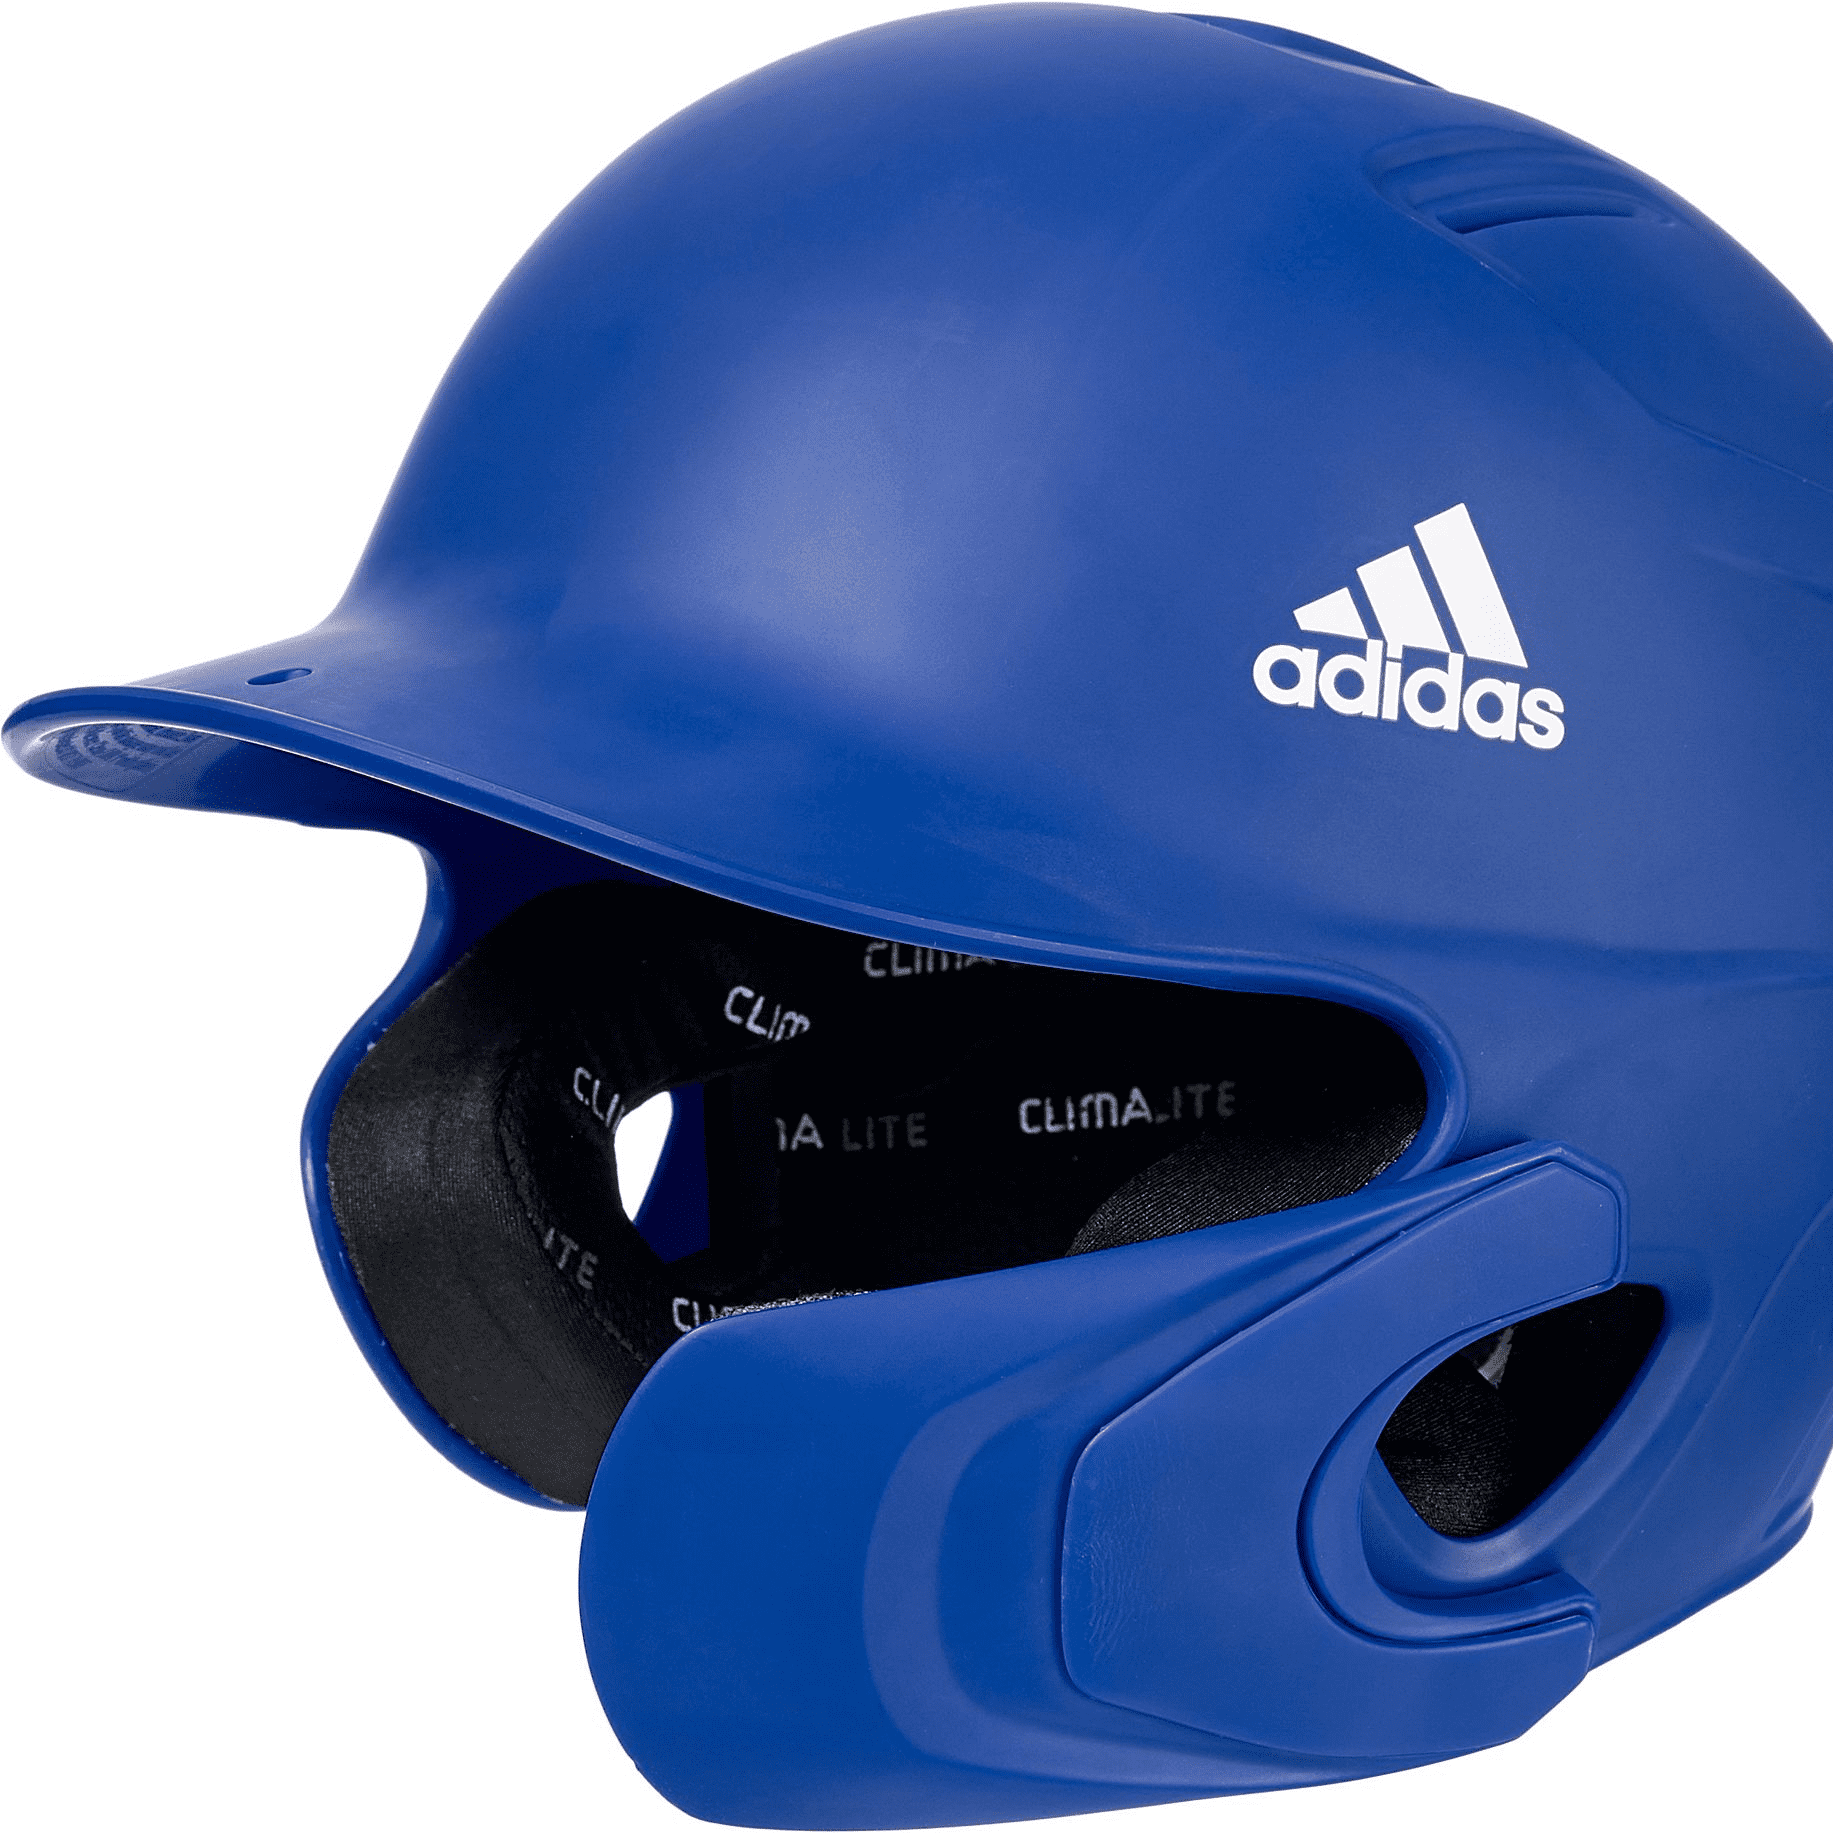 adidas youth softball helmet